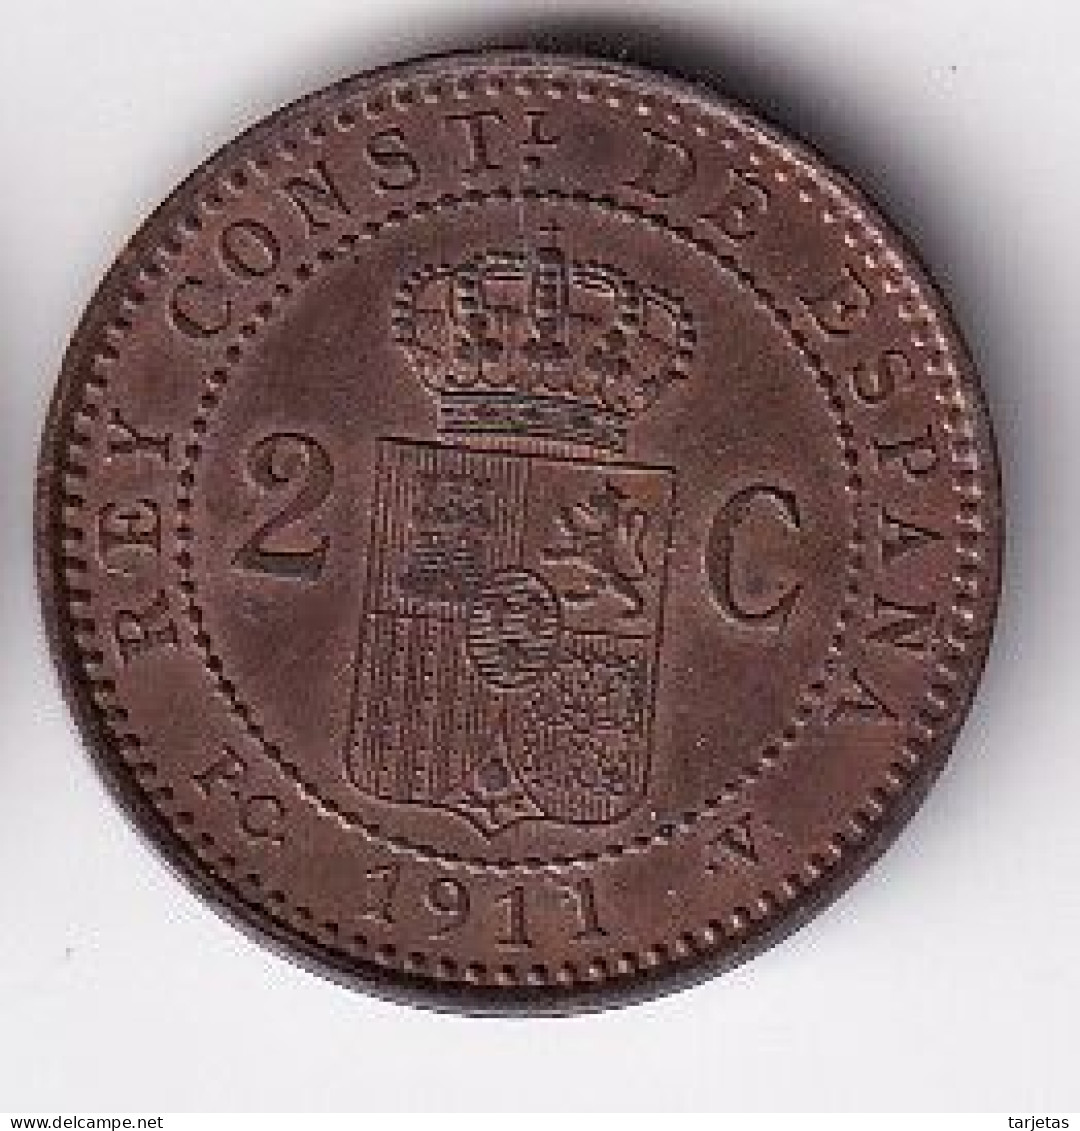 MONEDA DE ESPAÑA DE 2 CENTIMOS DEL AÑO 1911 (COIN) ALFONSO XIII - First Minting